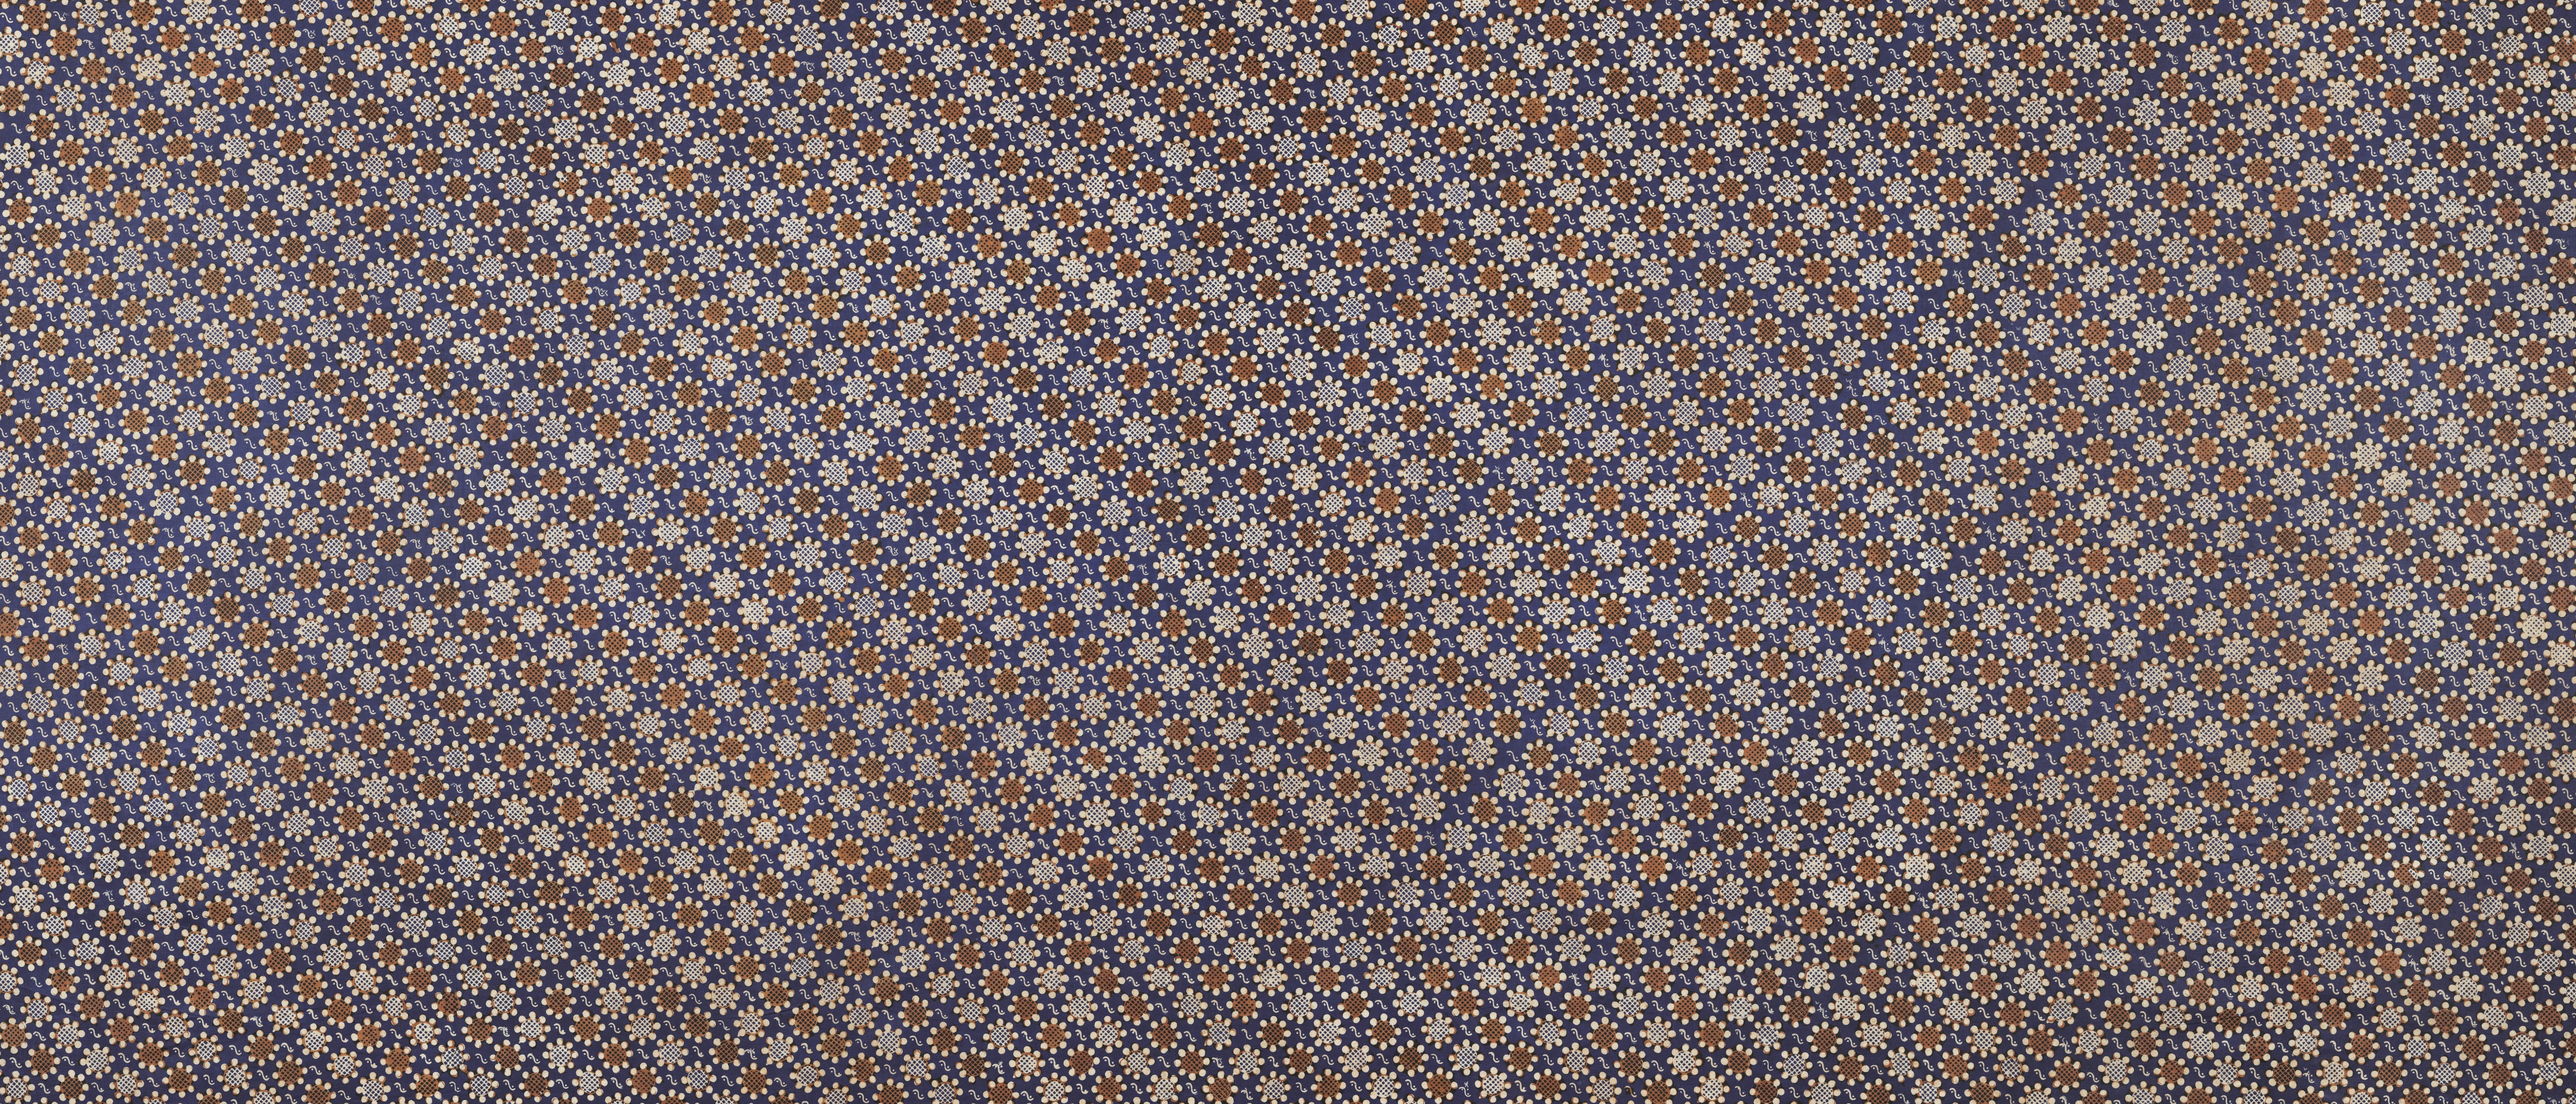 General 6288x2695 ultrawide fabric texture pattern symmetry